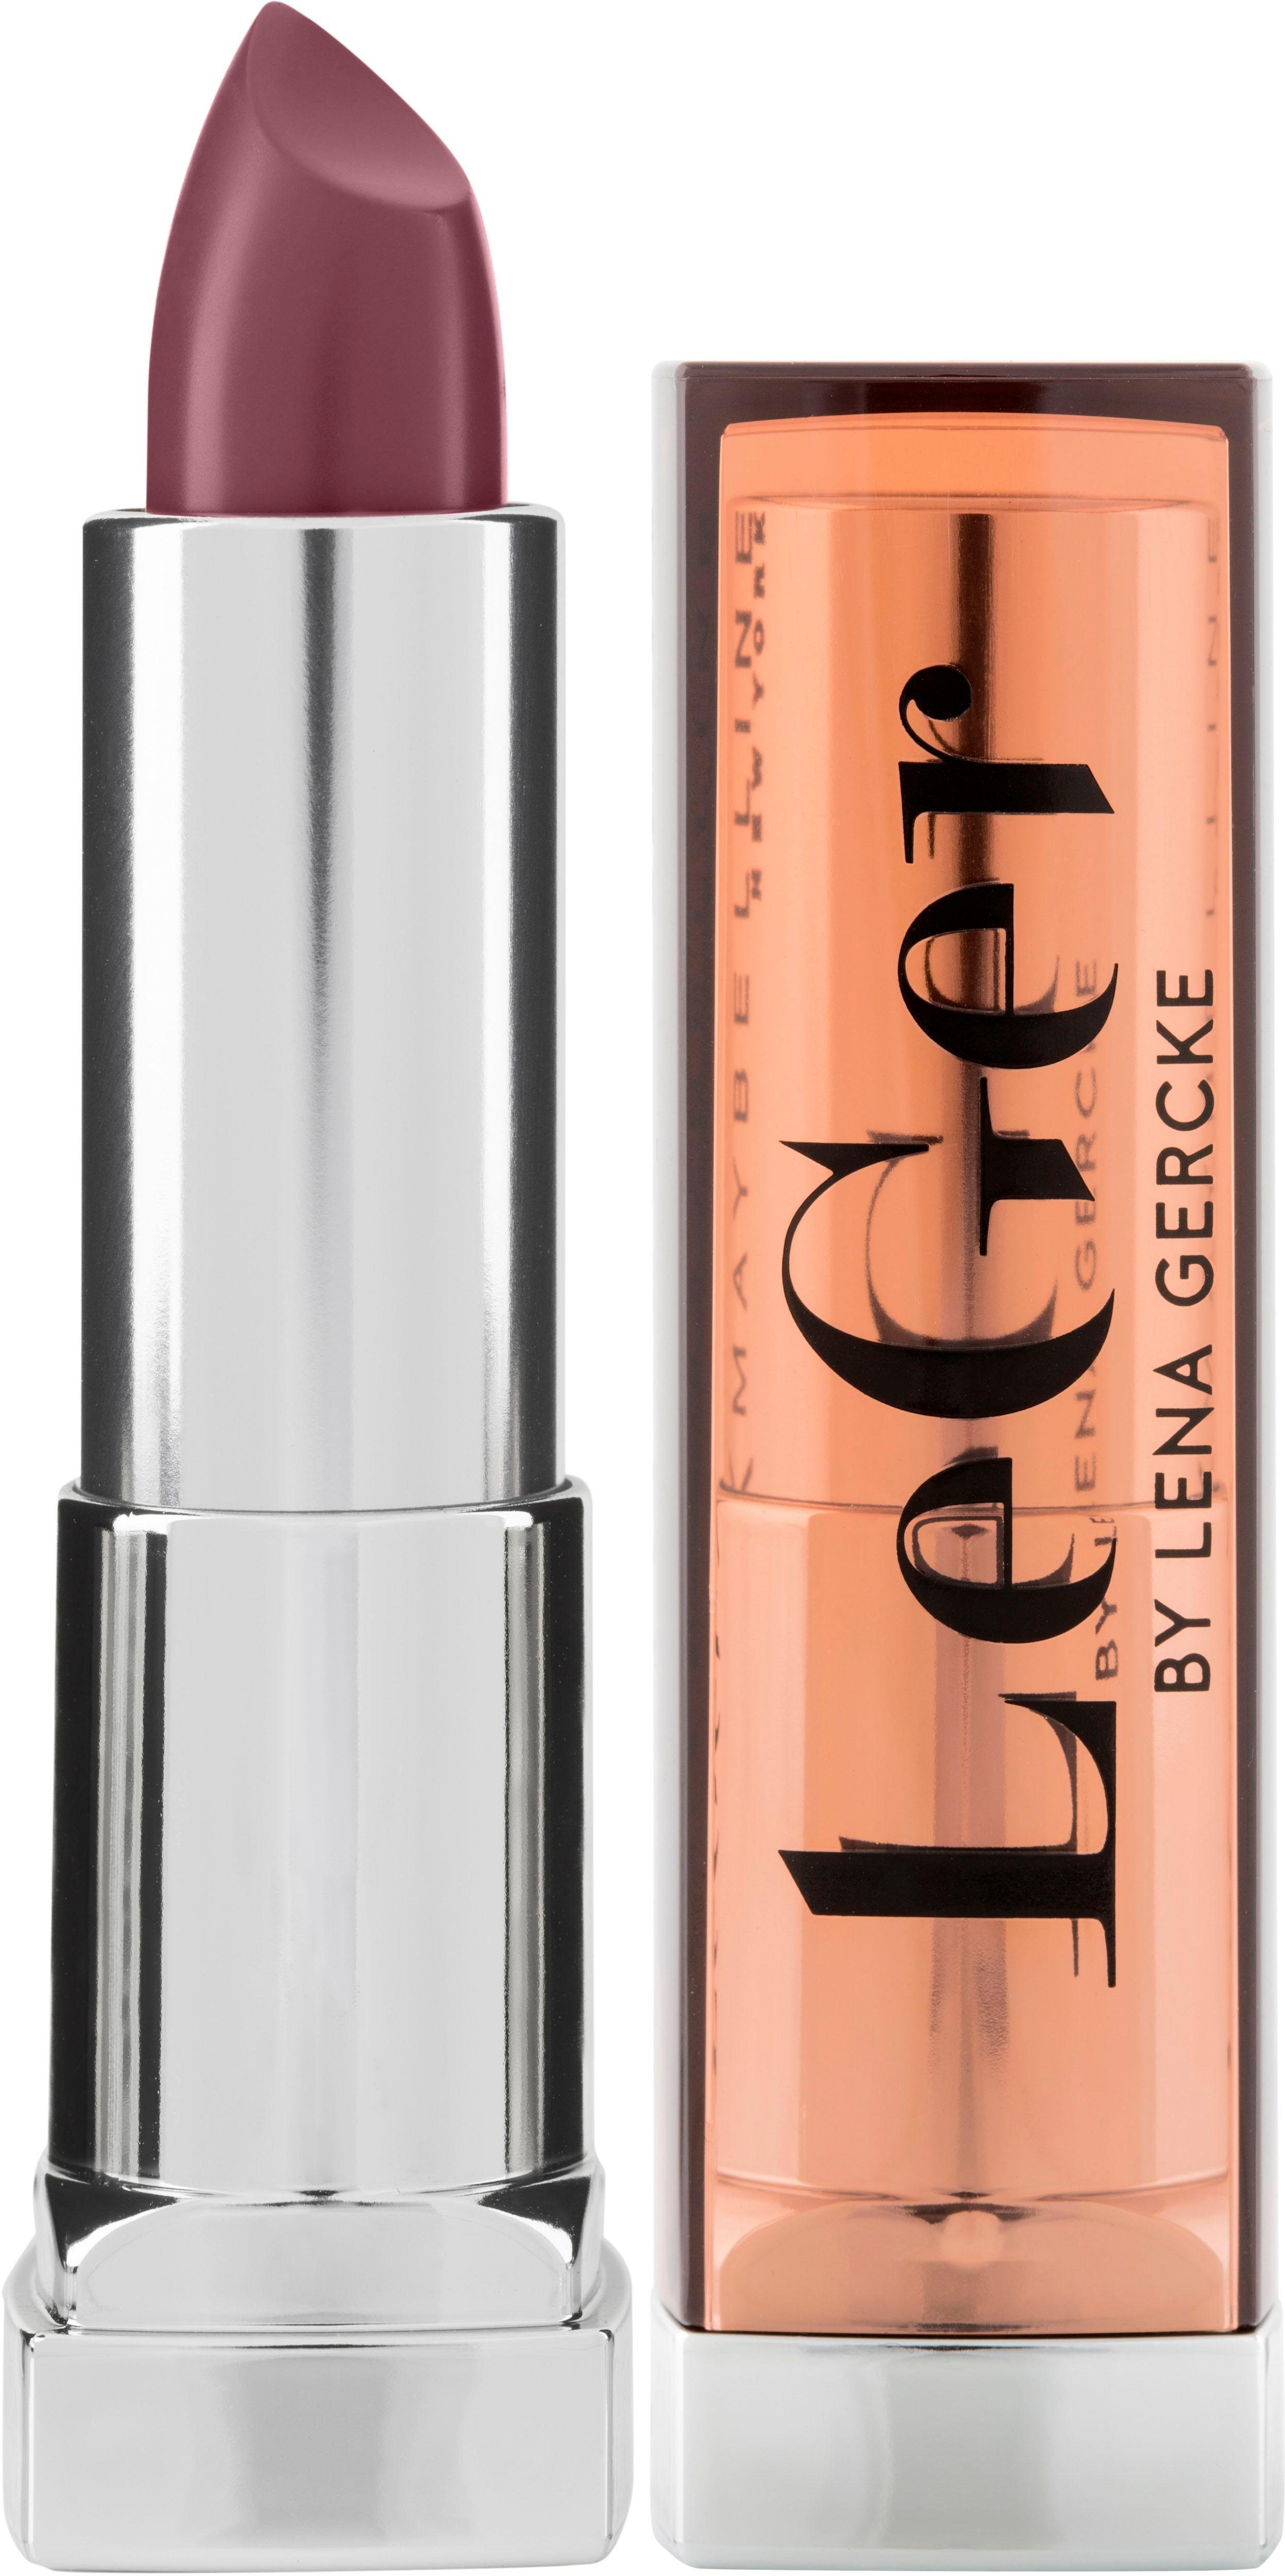 MAYBELLINE NEW YORK Lippenstift »Color Sensational LeGer«, Lena Gercke  Limited Edition online kaufen | OTTO